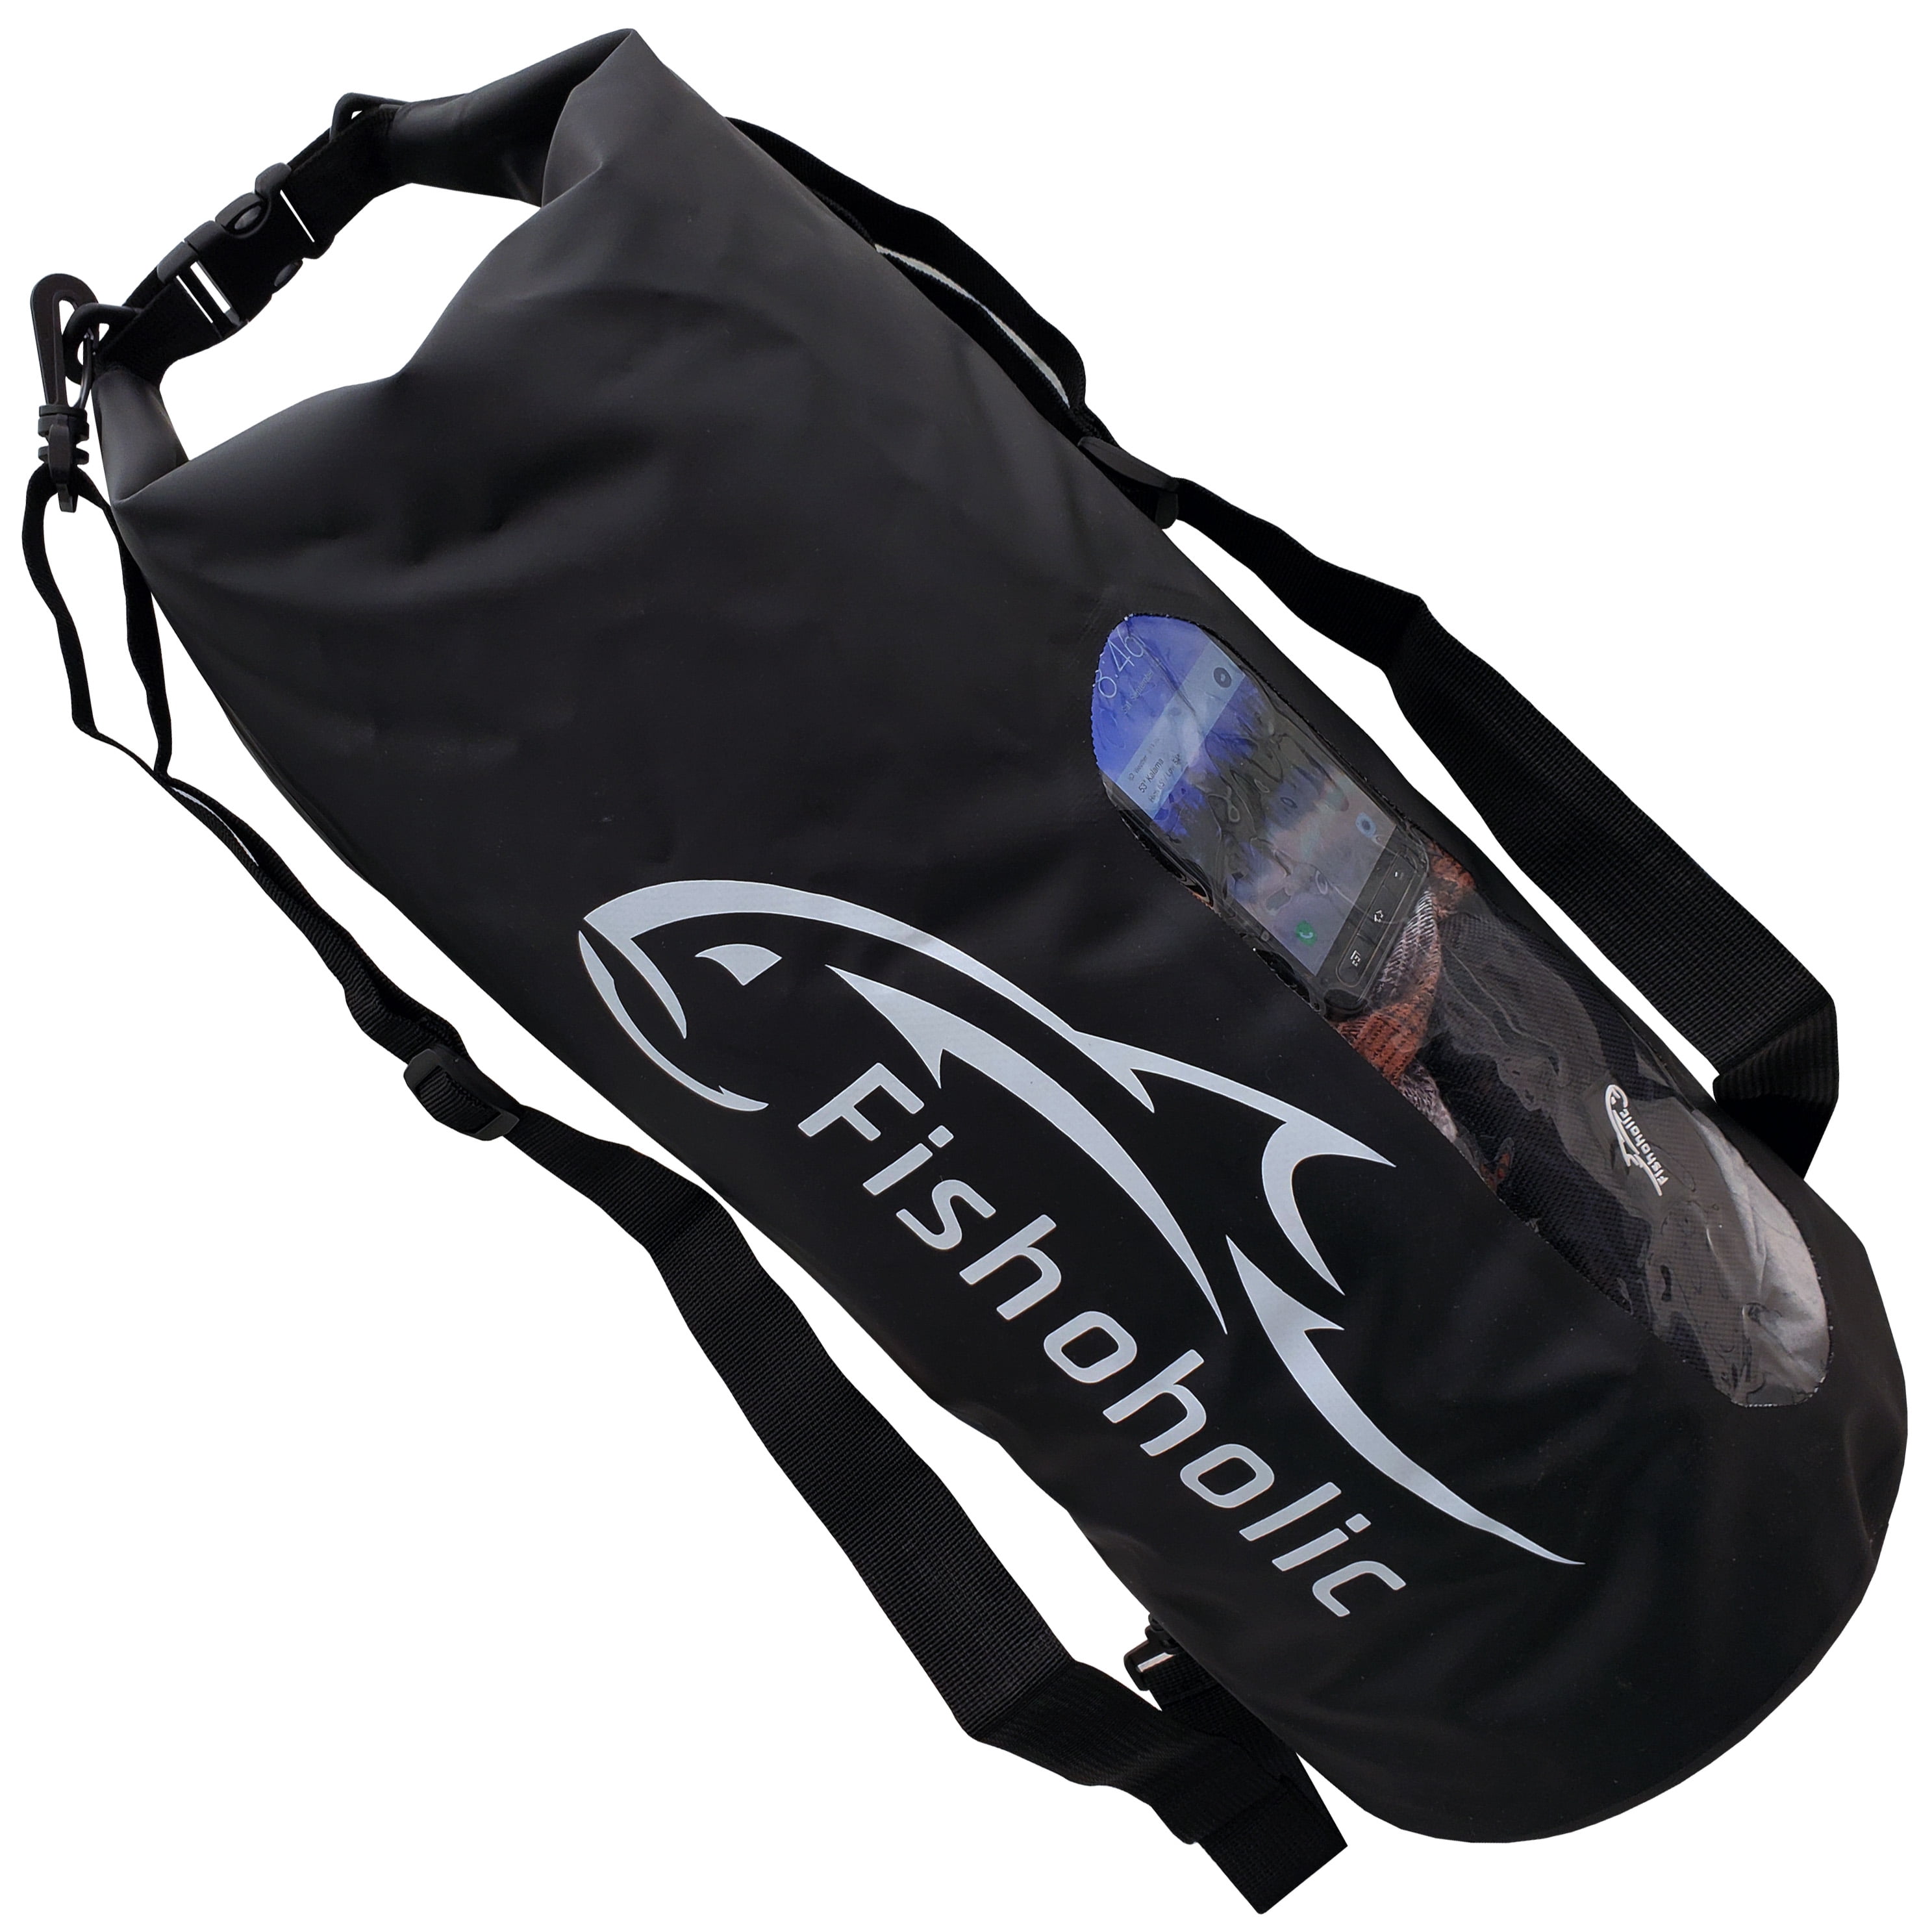 Fail-Safe Snap Fishoholic Dry Bag Waterproof Gear Bags Made Tough & Durable for Kayaking Boating Fishing Hiking Camping Paddle Board & Tailgaiting 